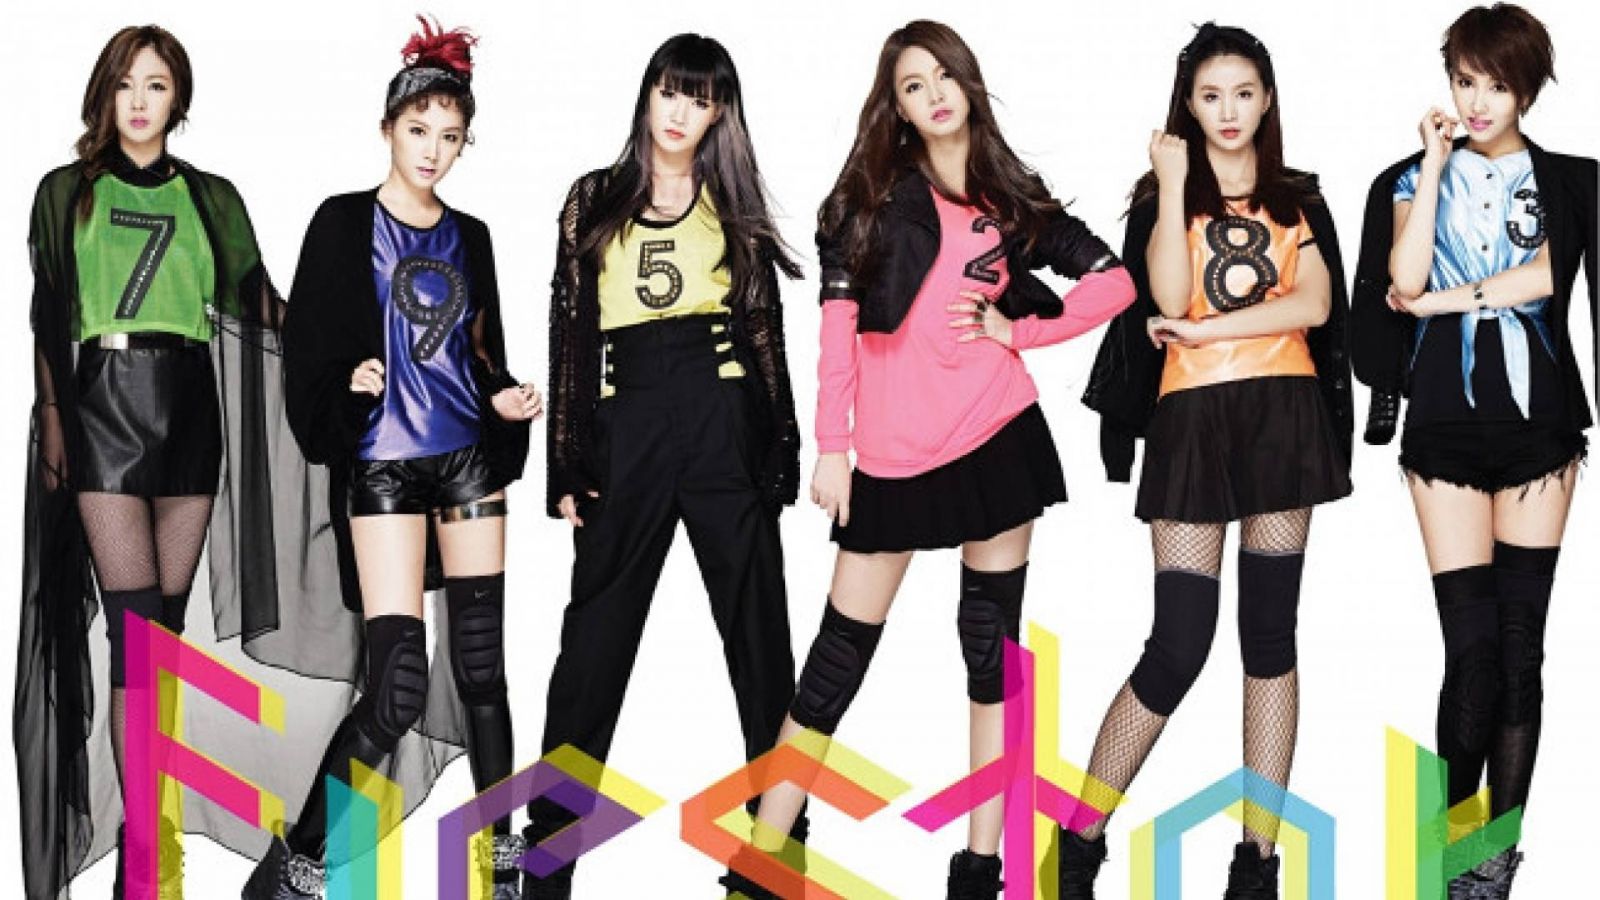 FIESTAR lança seu segundo single © Loen Entertainment